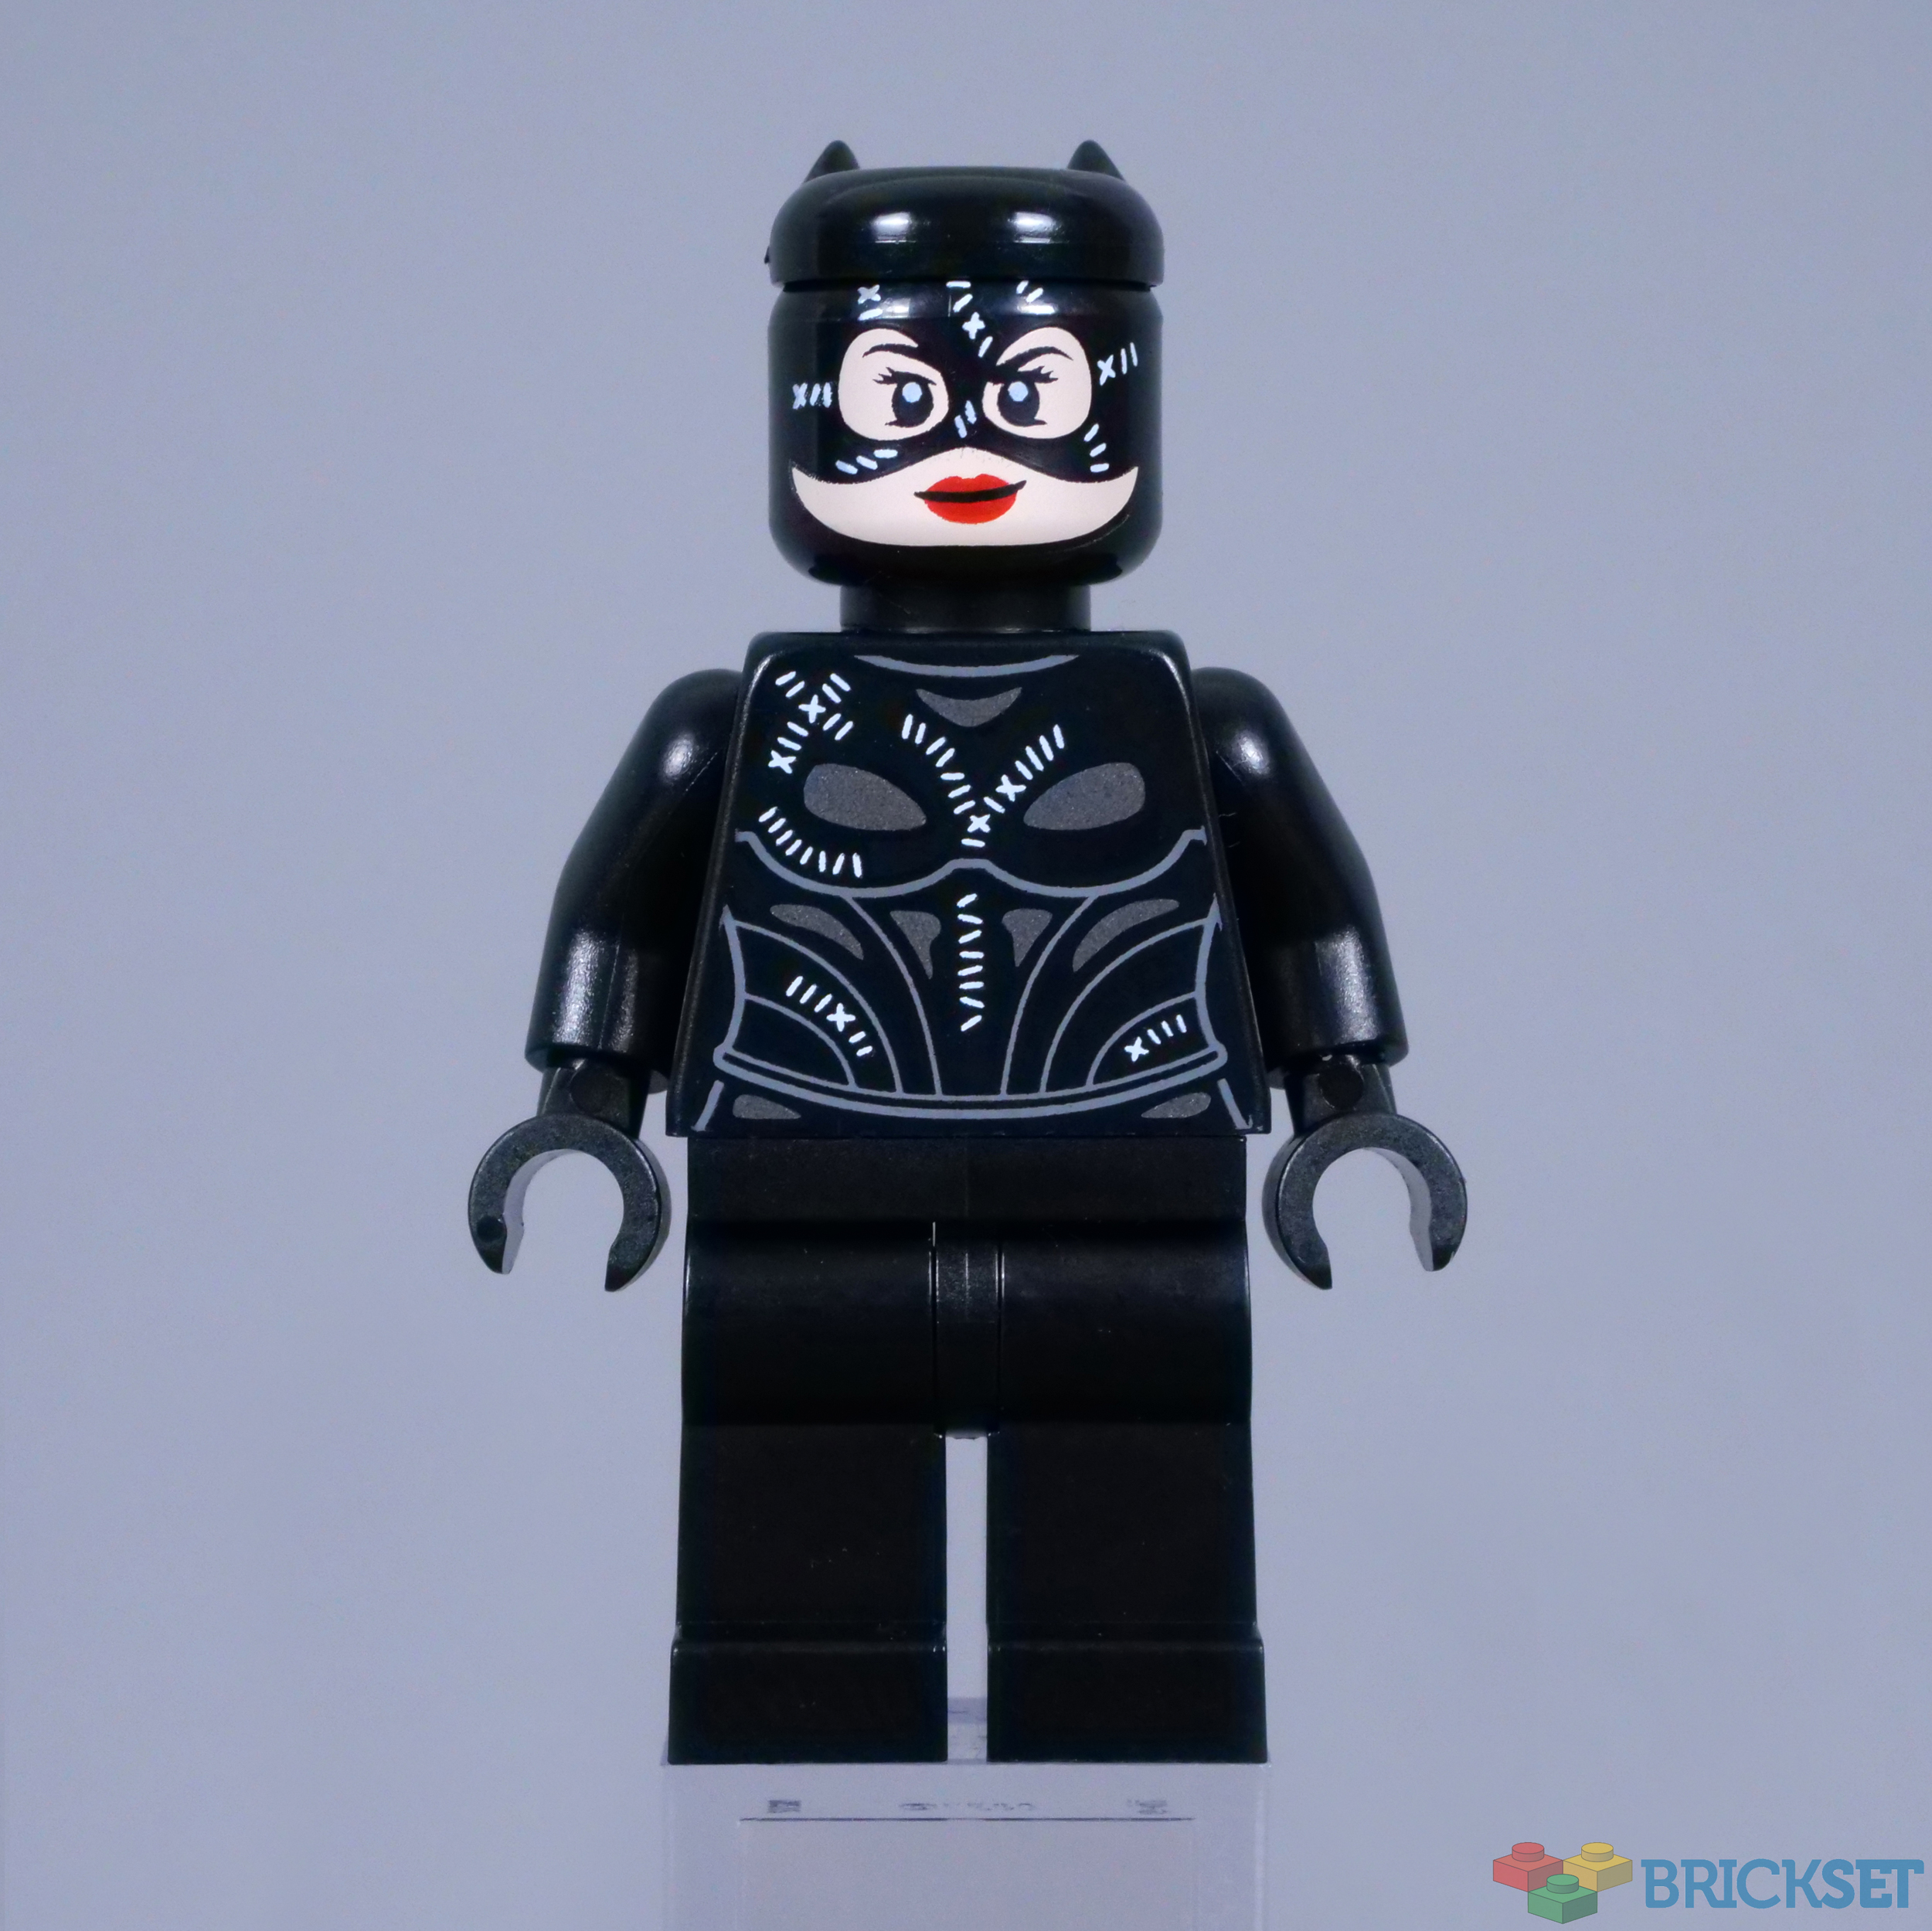 Batman Returns With A New Michael Keaton-era Inspired LEGO Set